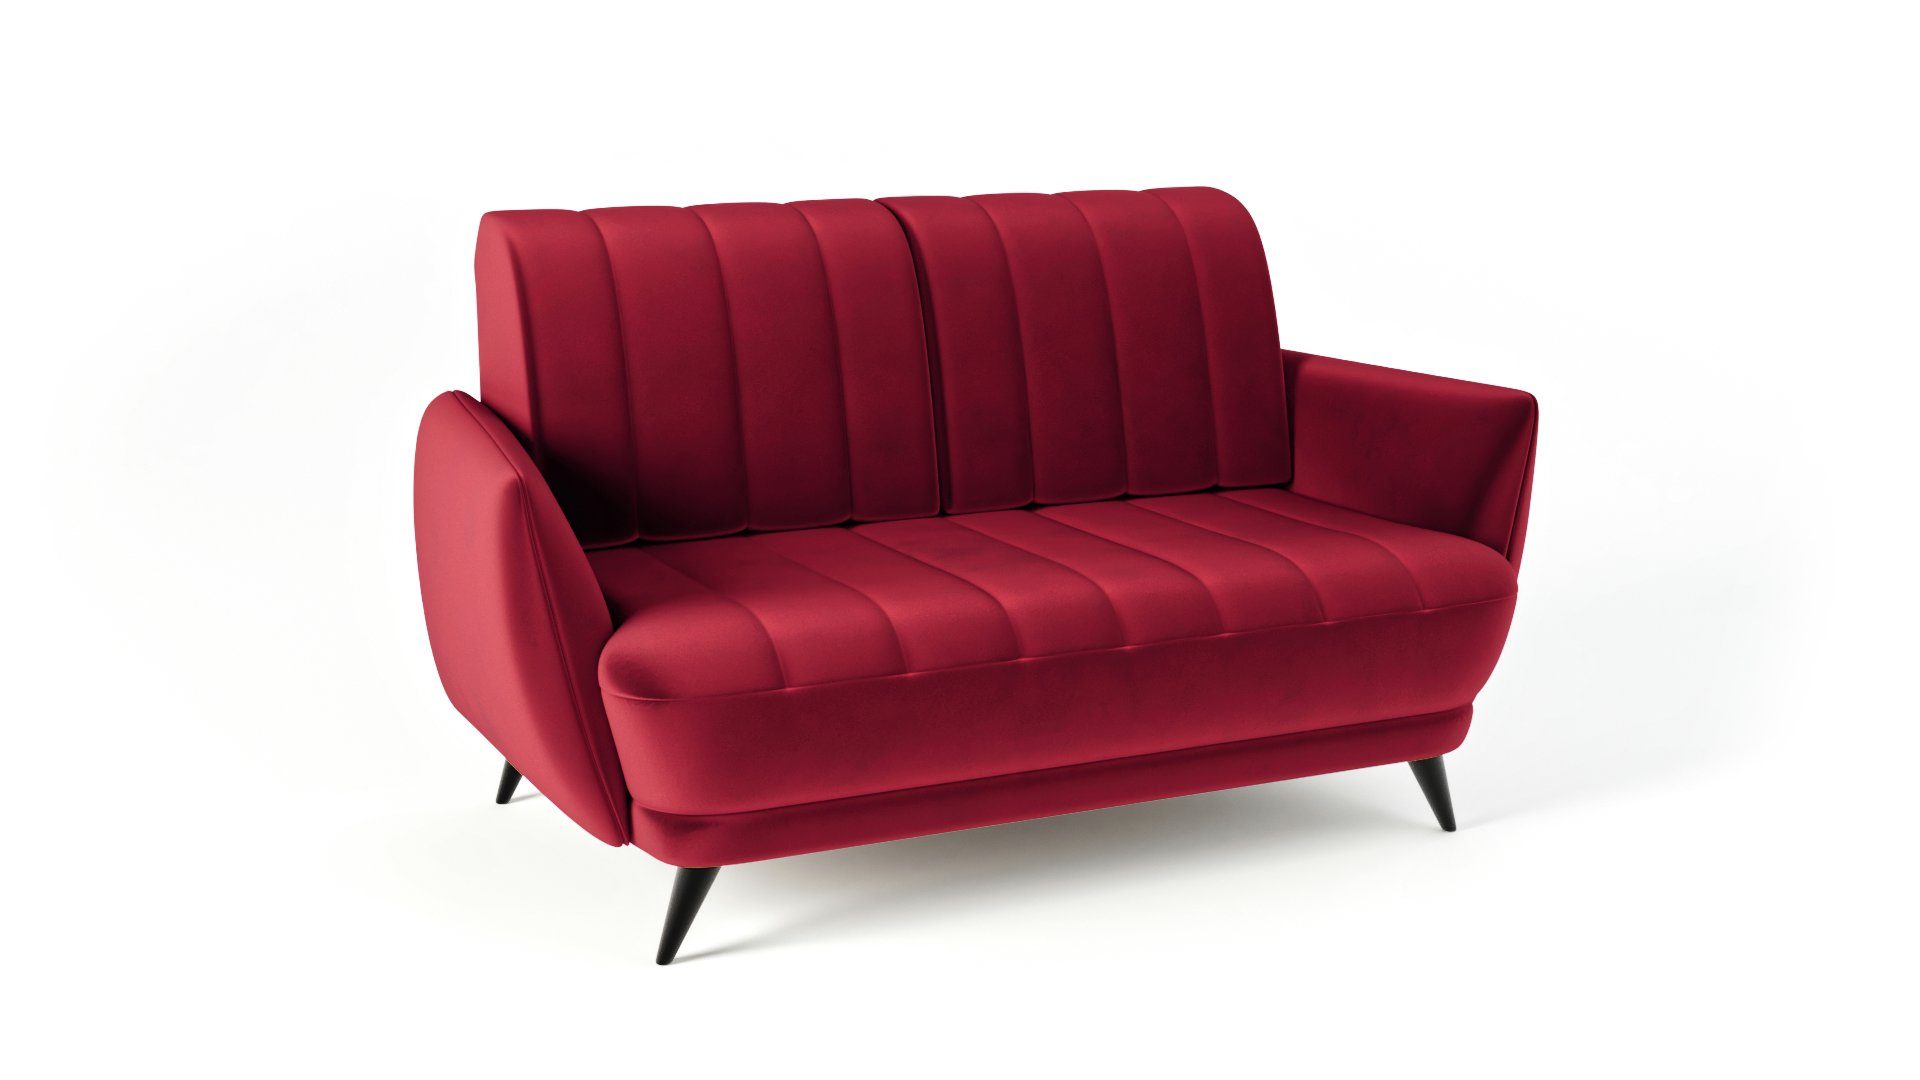 Zweisitzer-Sofa Elegantes Rolo 2 2-Sitzer Rot Sofa Siblo Zweisitziges -